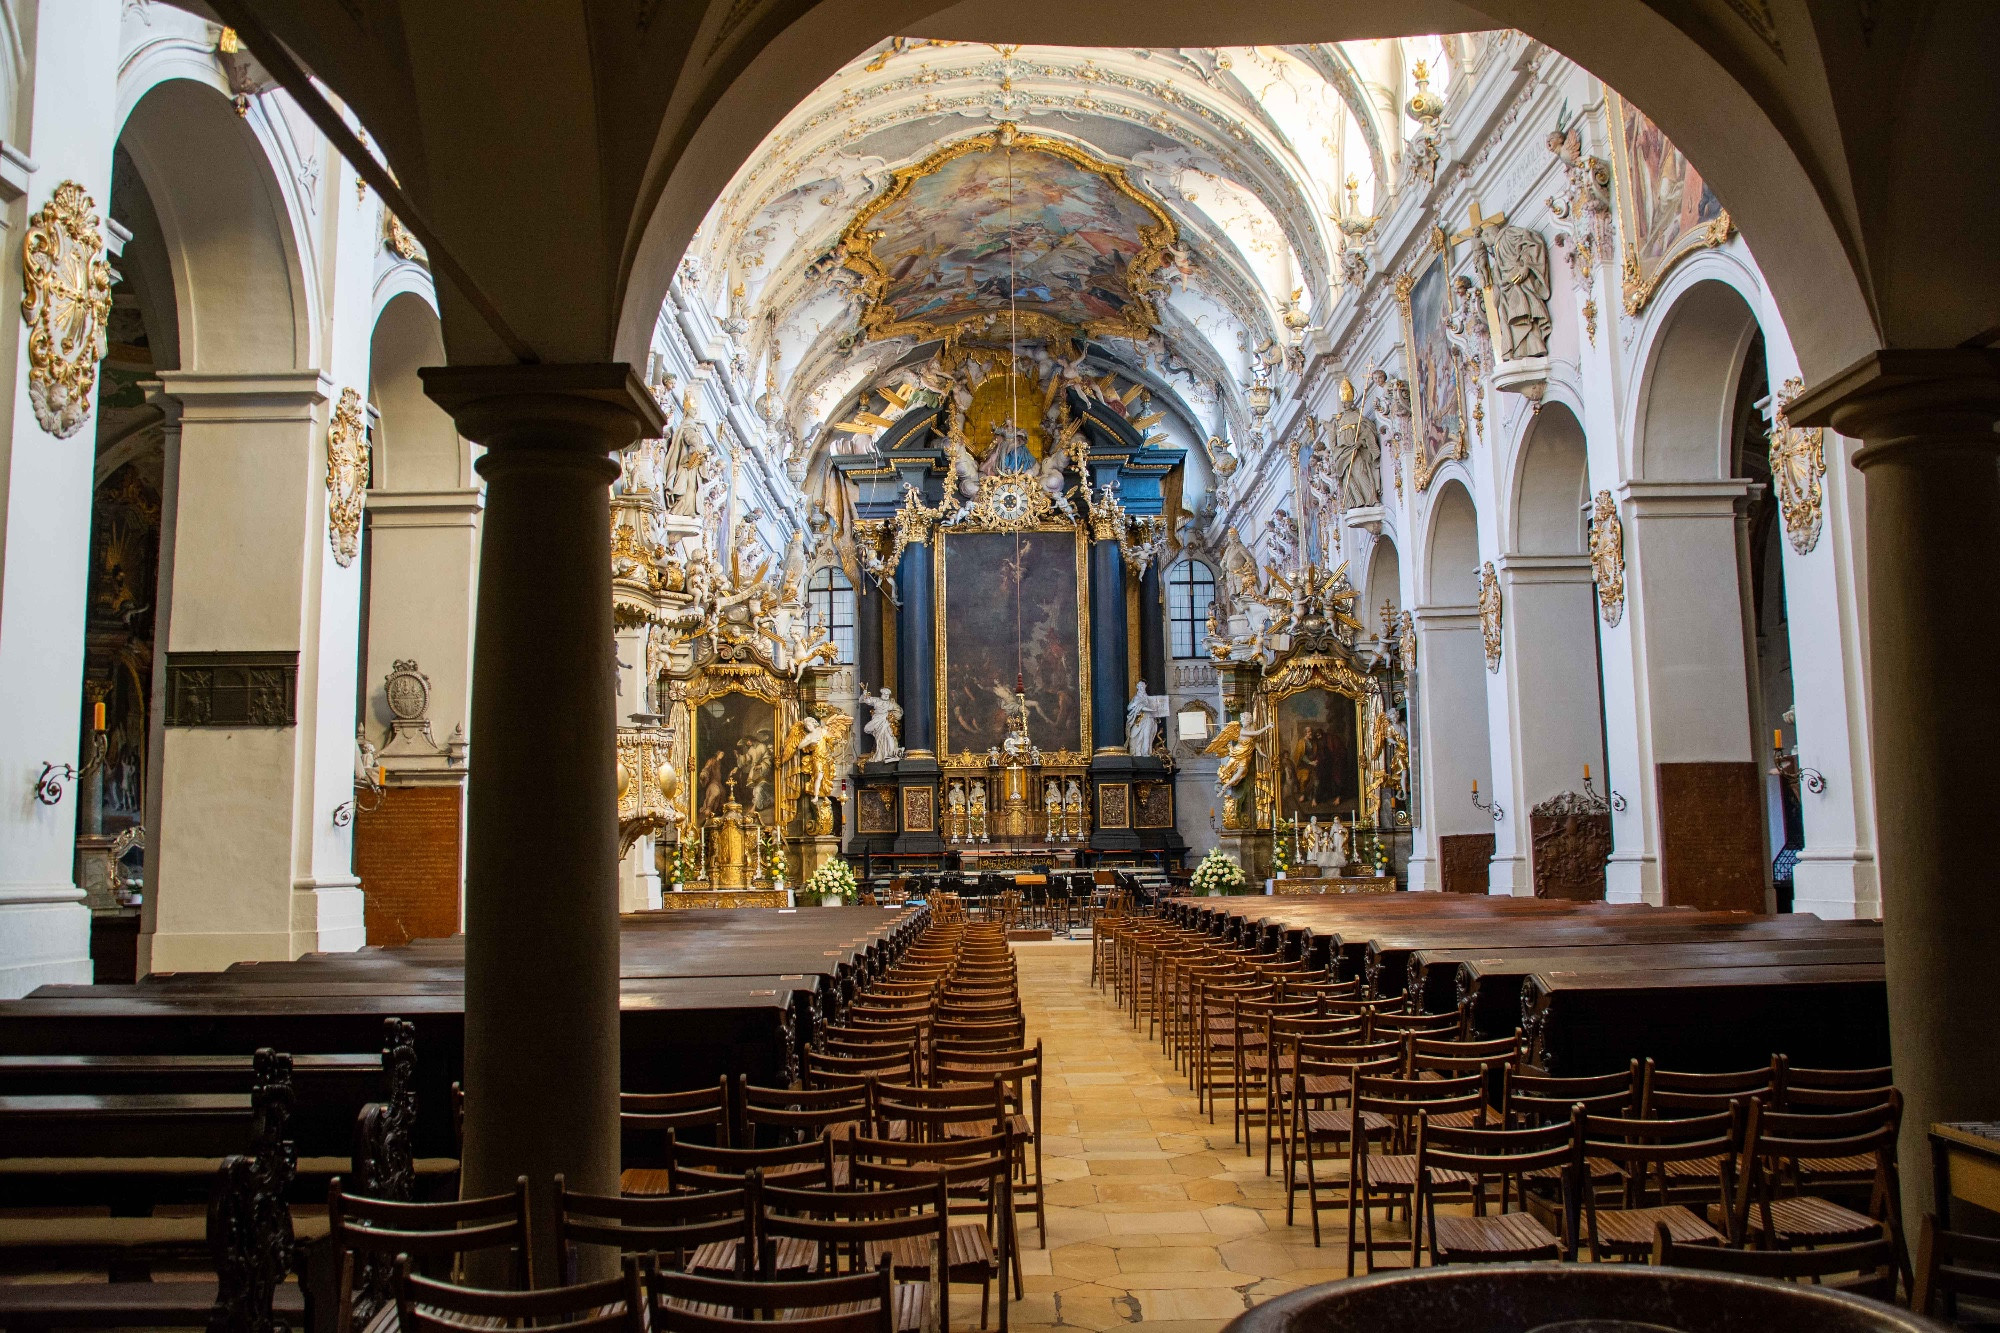 Basilika St. Emmeram, Germany